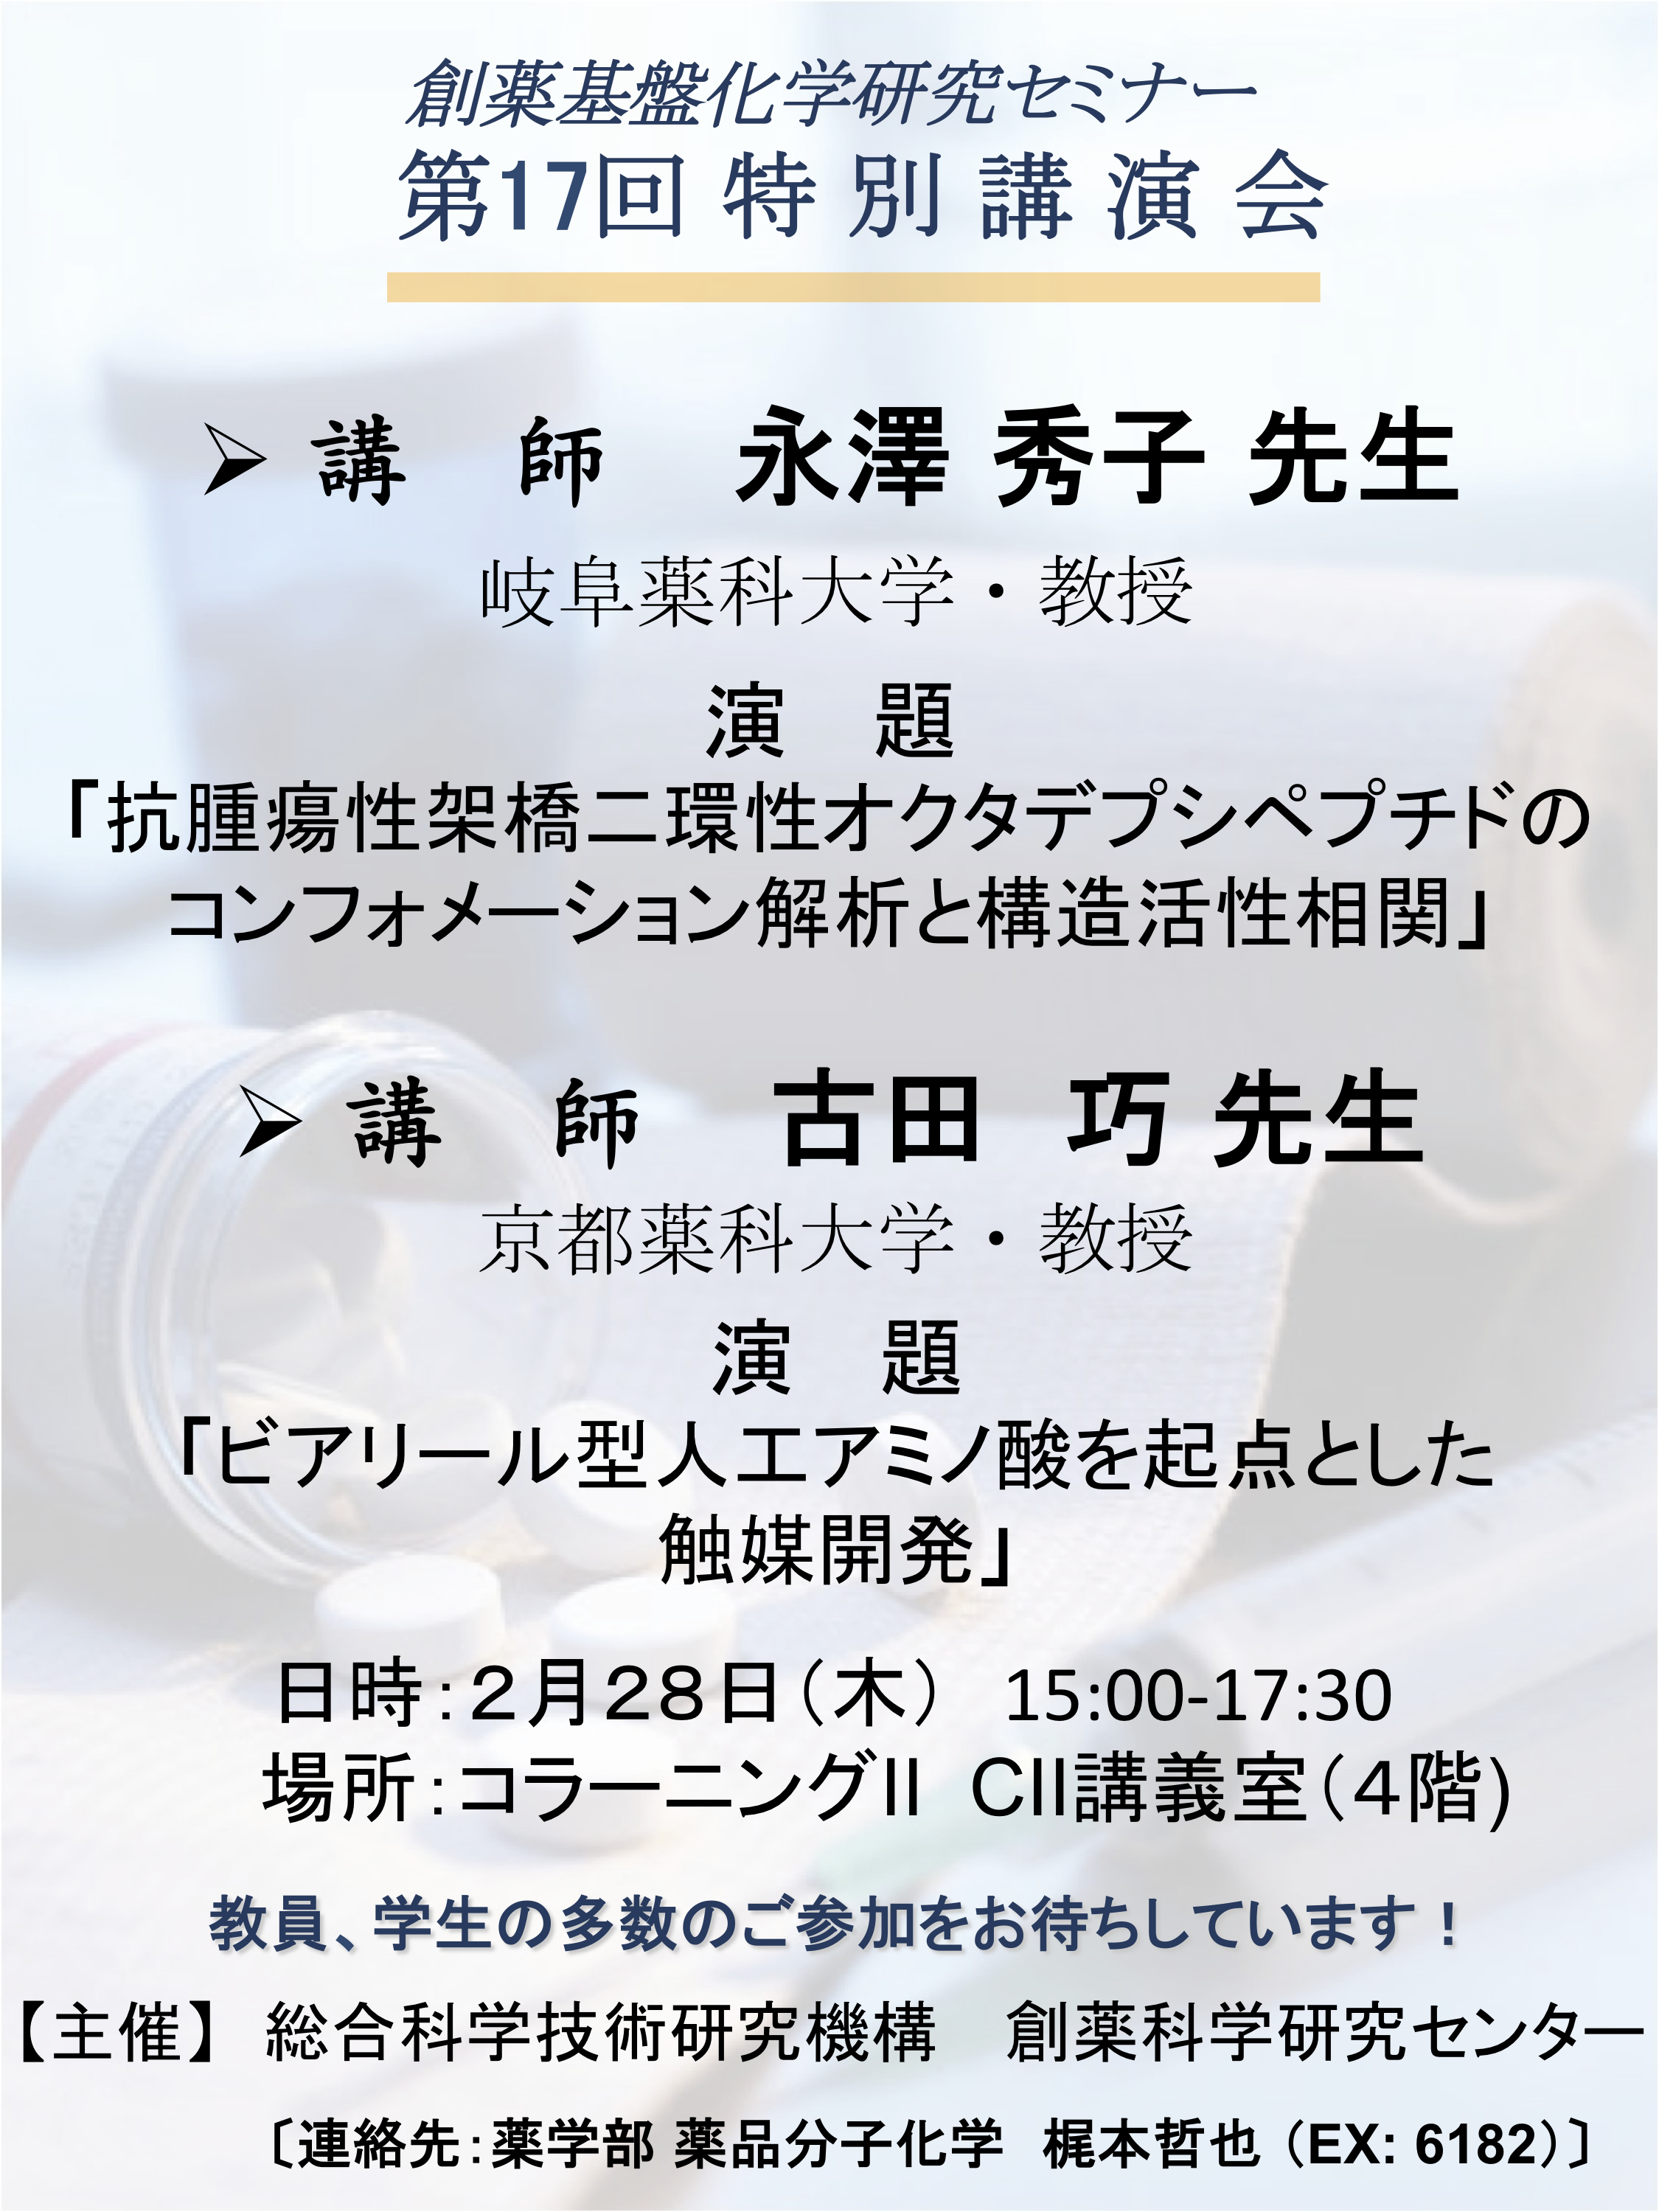 2019. Feb. 28　永澤教授が立命館大学創薬基盤化学研究セミナーにて講演します。